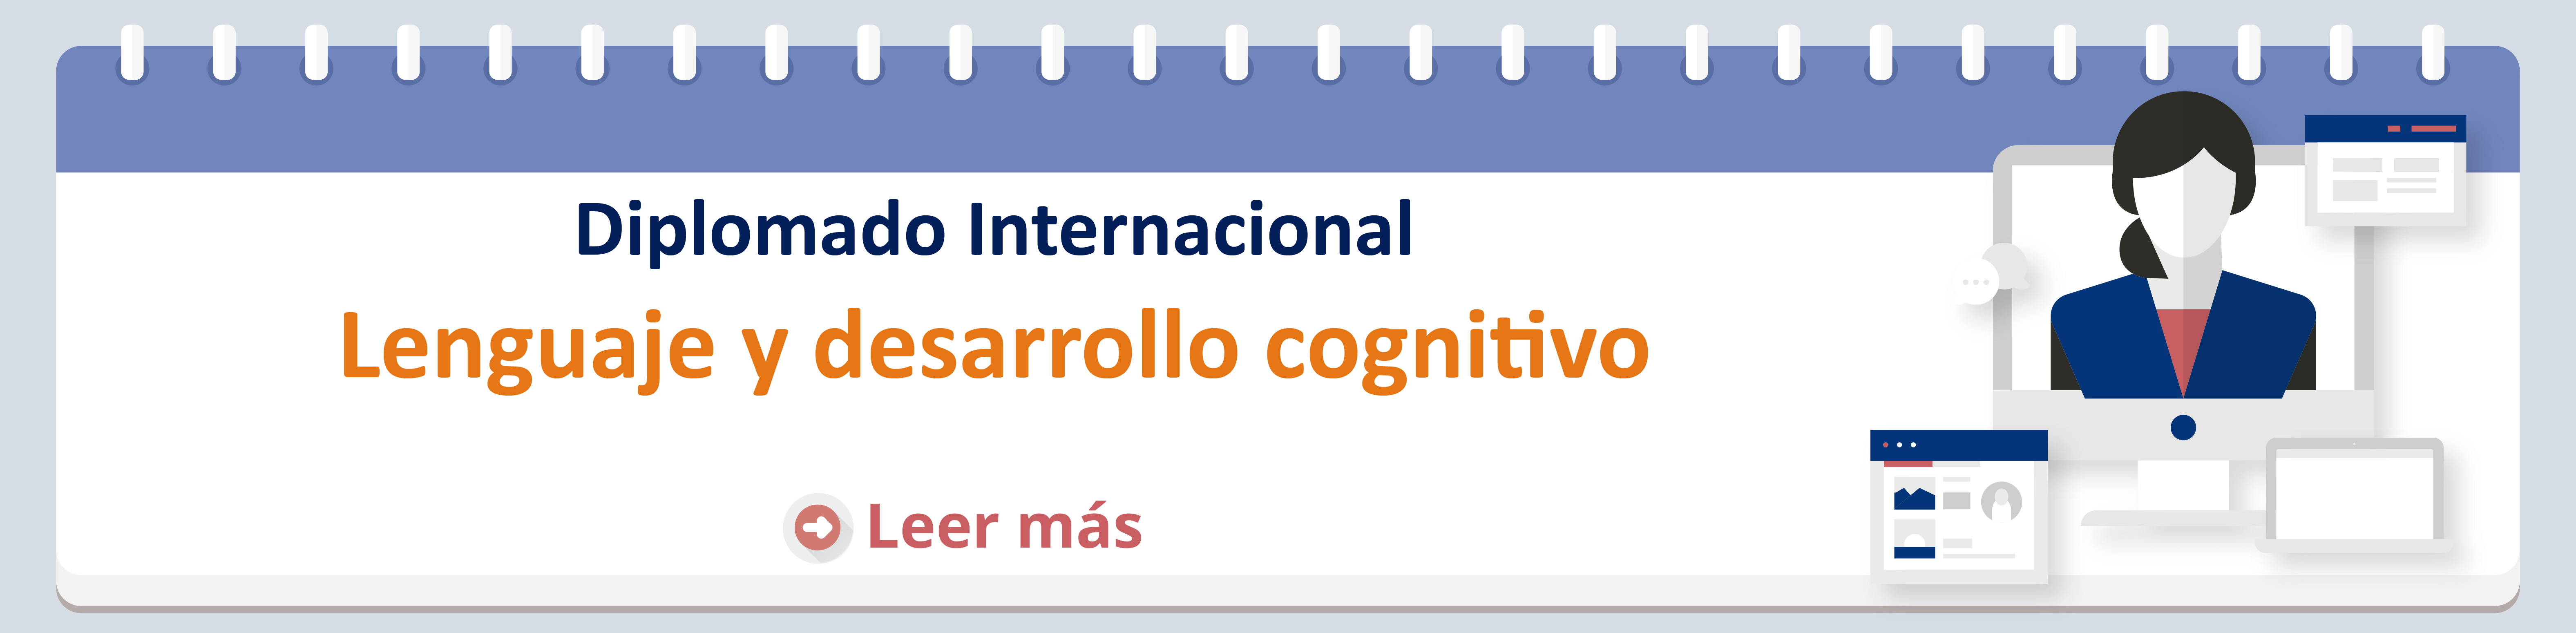 diplomado_internacional_lenguaje_desarrollo_cognitivo.png